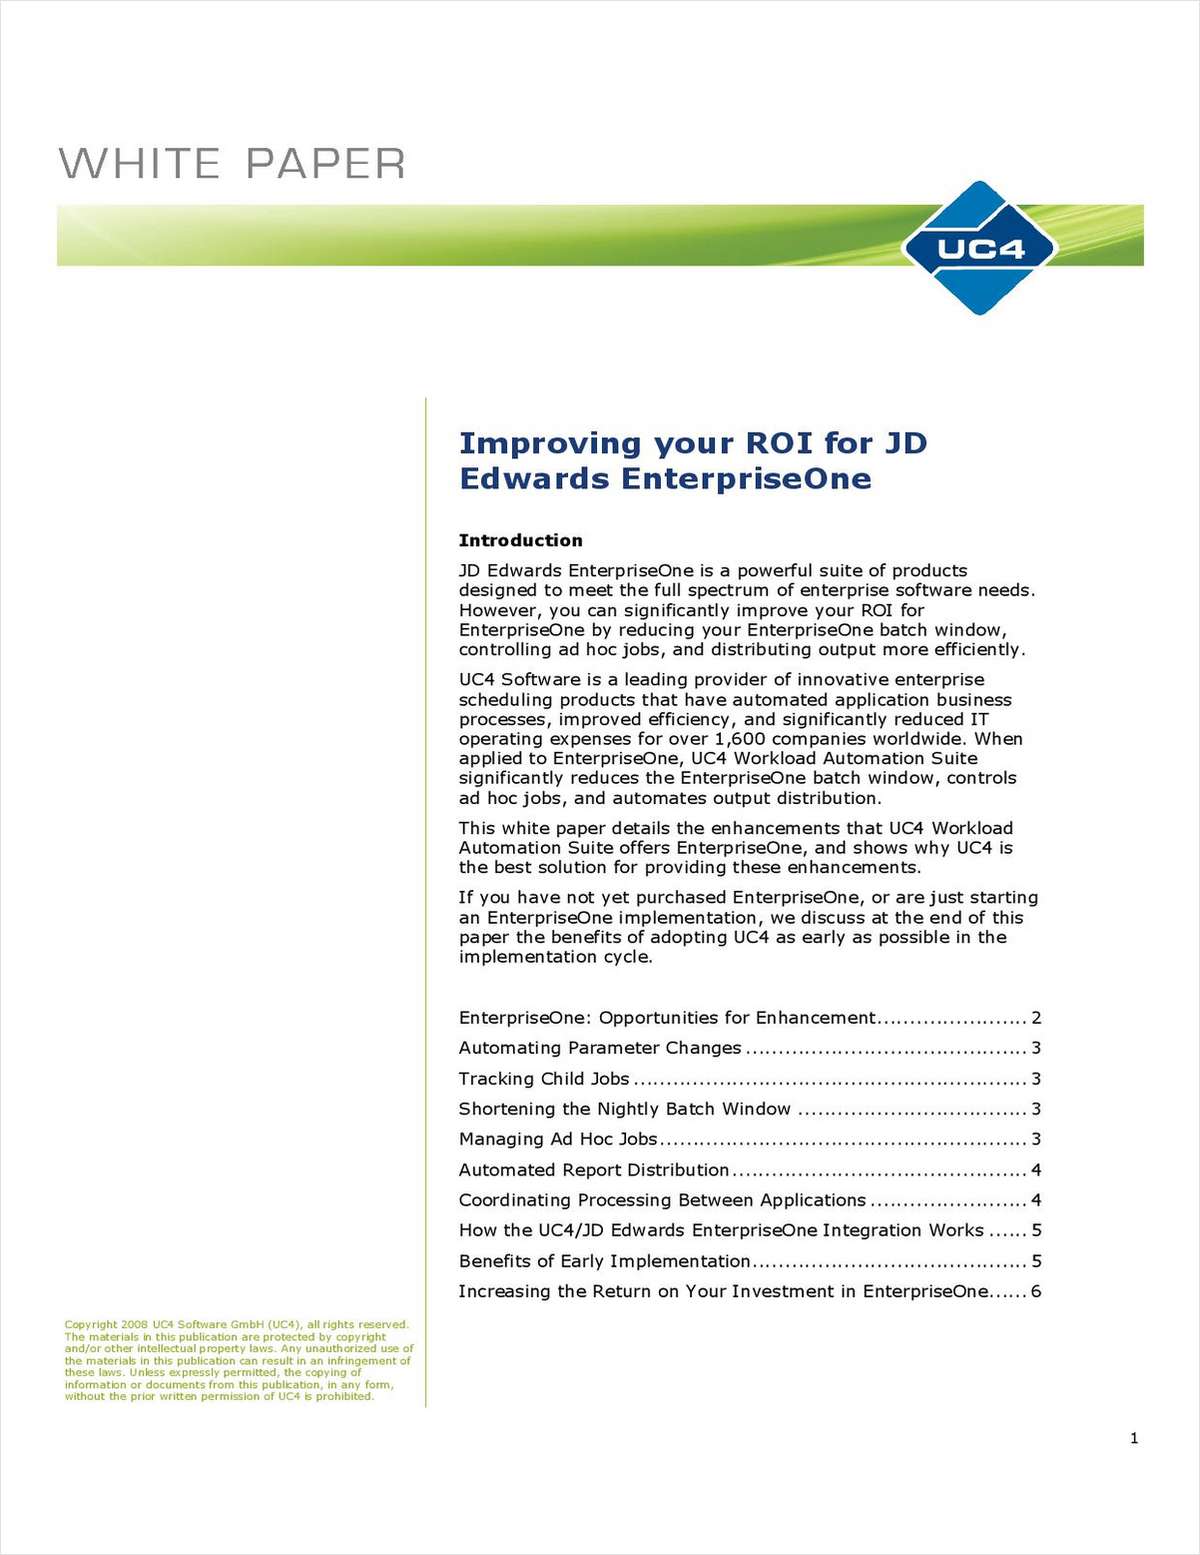 Improve your ROI for JD Edwards EnterpriseOne